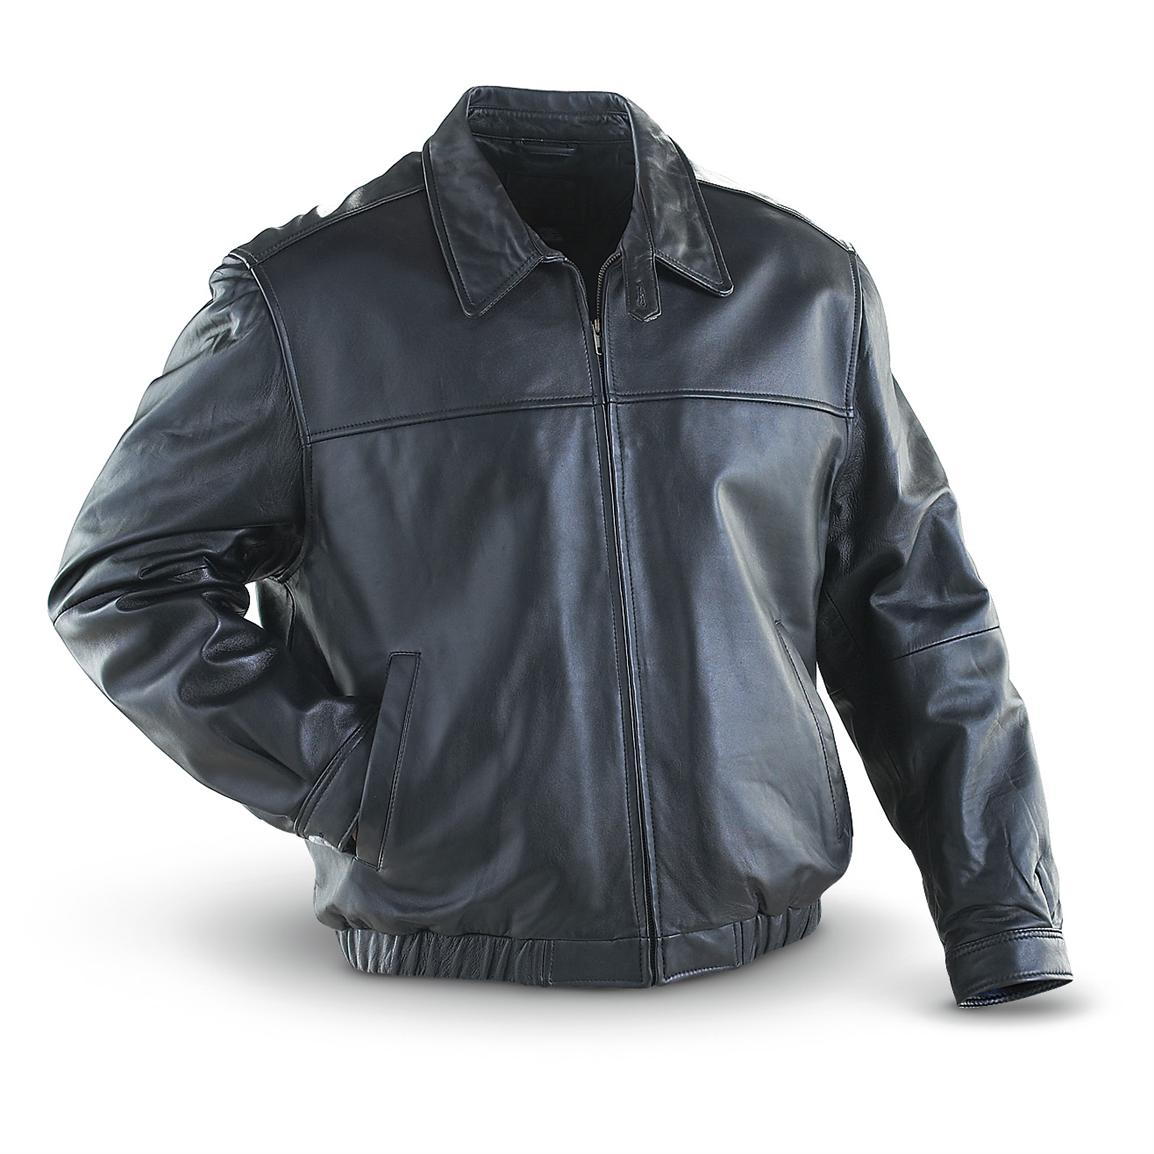 Famous Maker Leather Bomber Jacket, Black - 163729, Insulated Jackets ...